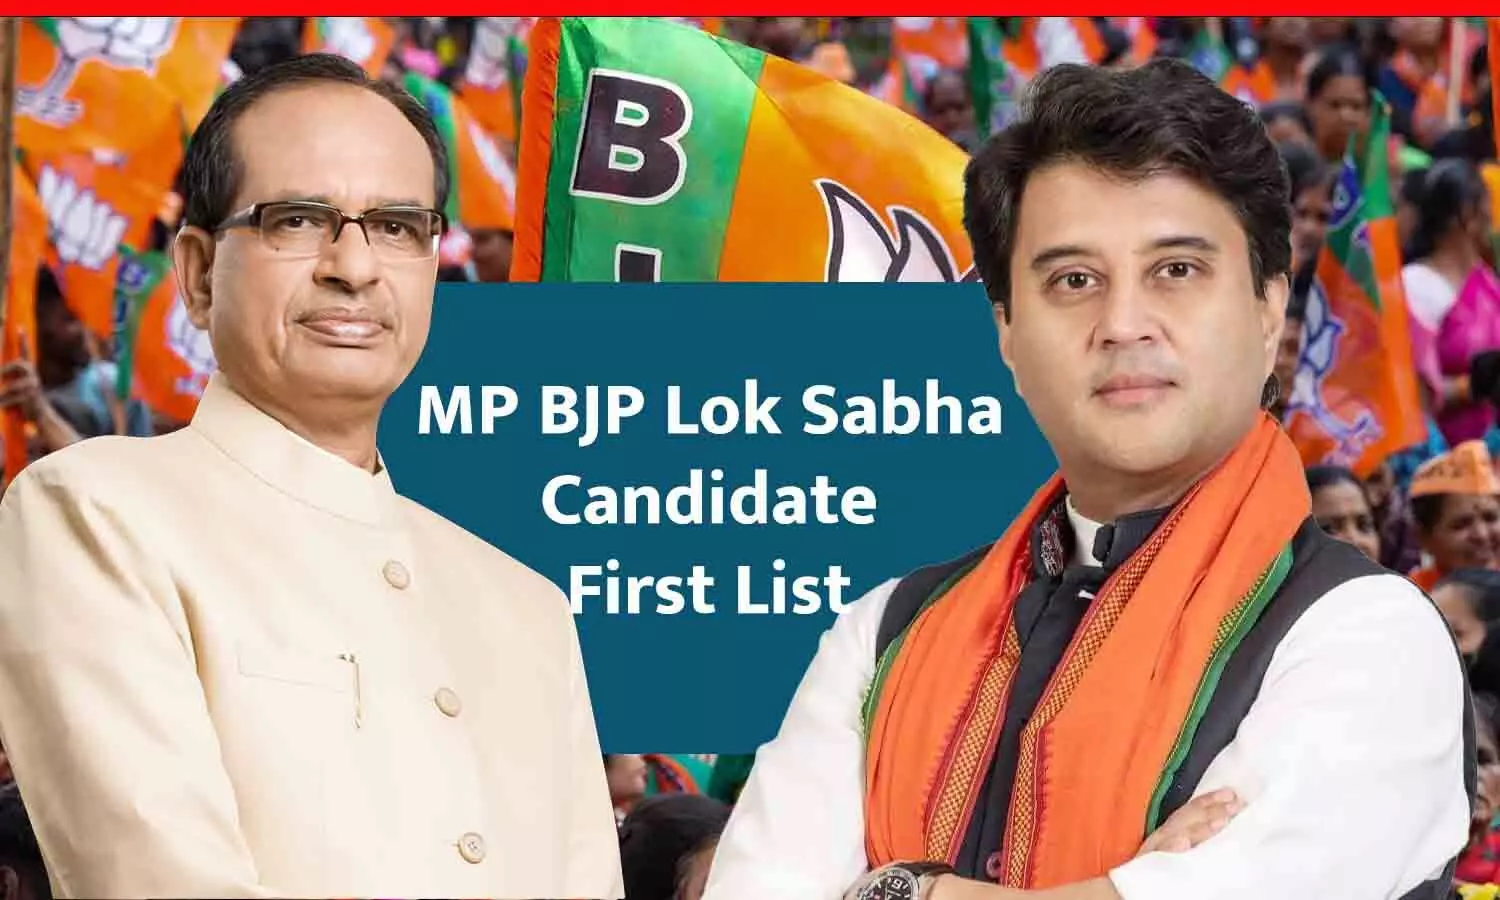 MP BJP LS Candidate First List